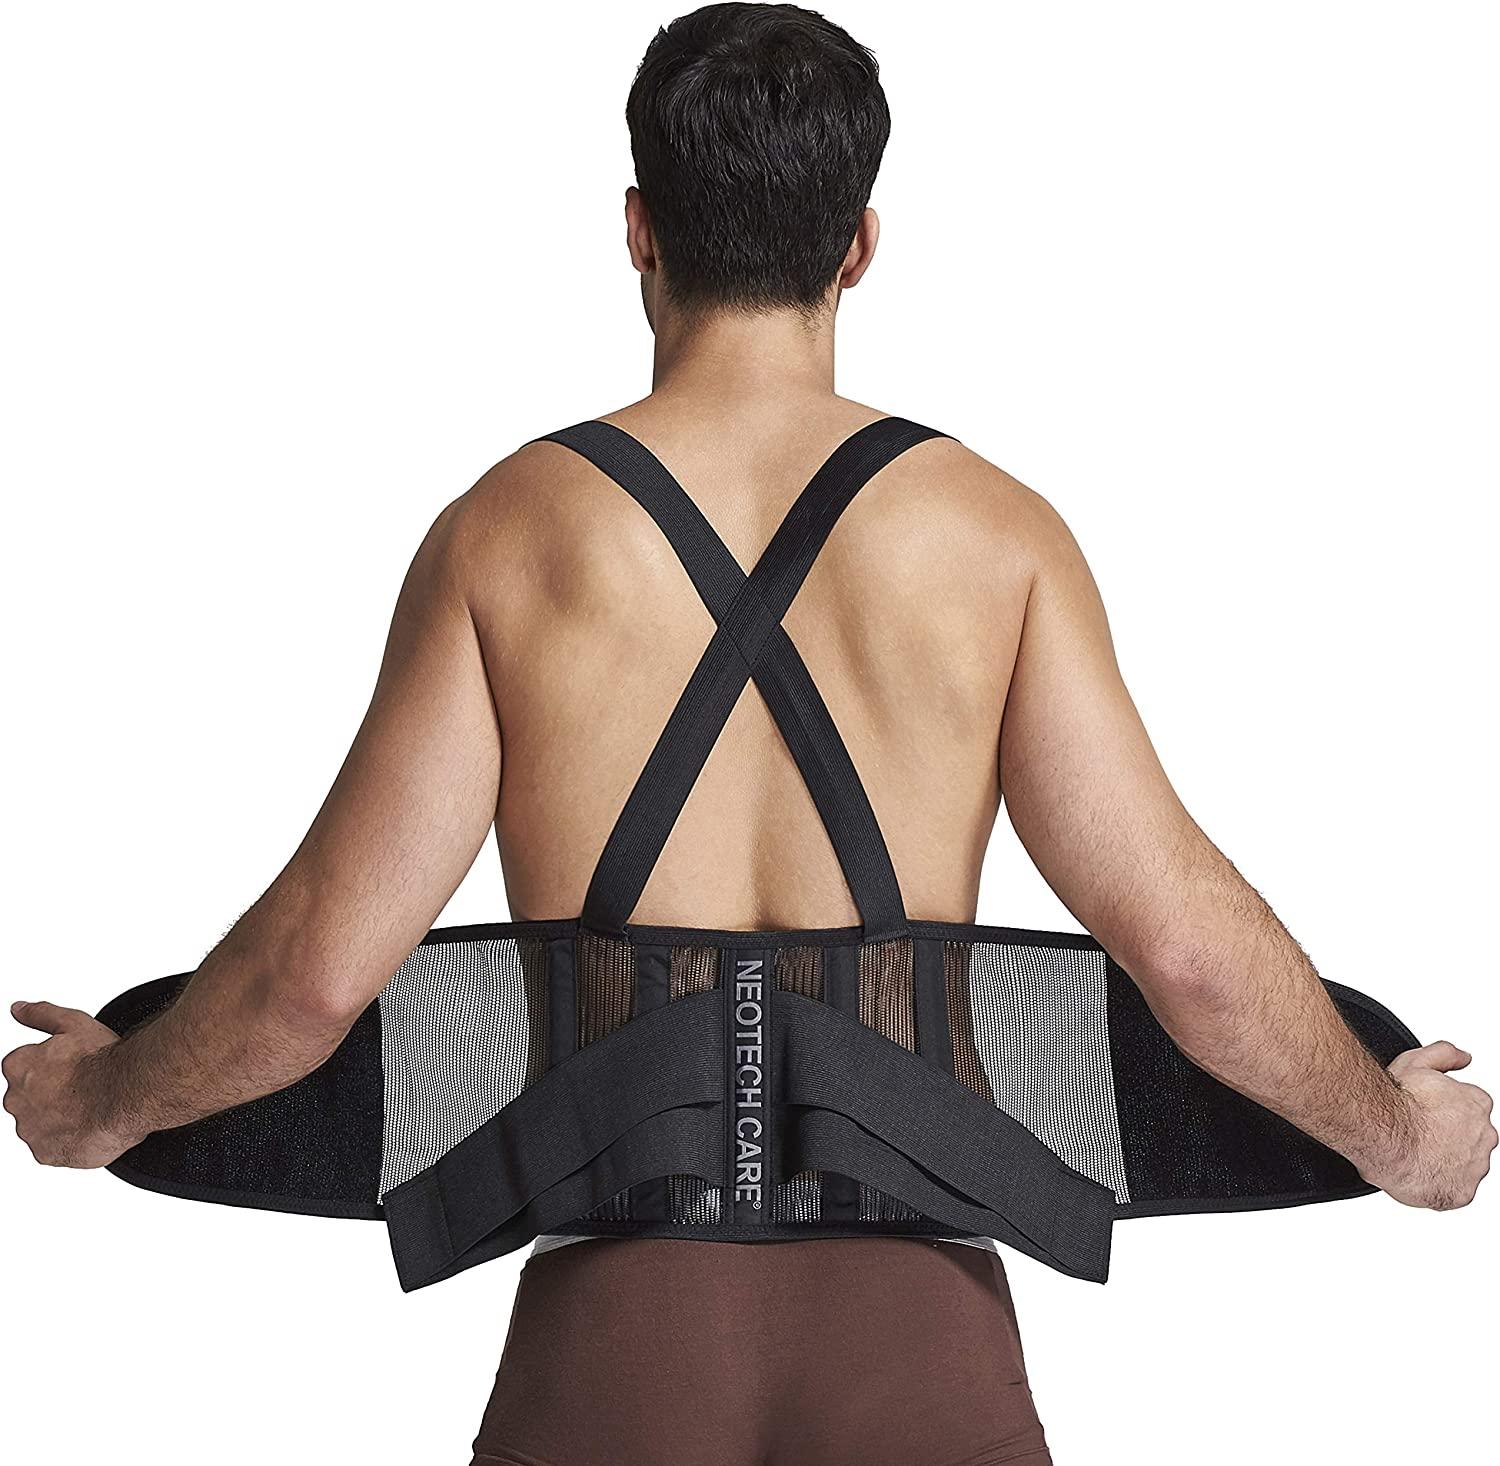 Lower Back Brace With Suspenders Back Support Belt For Men Women